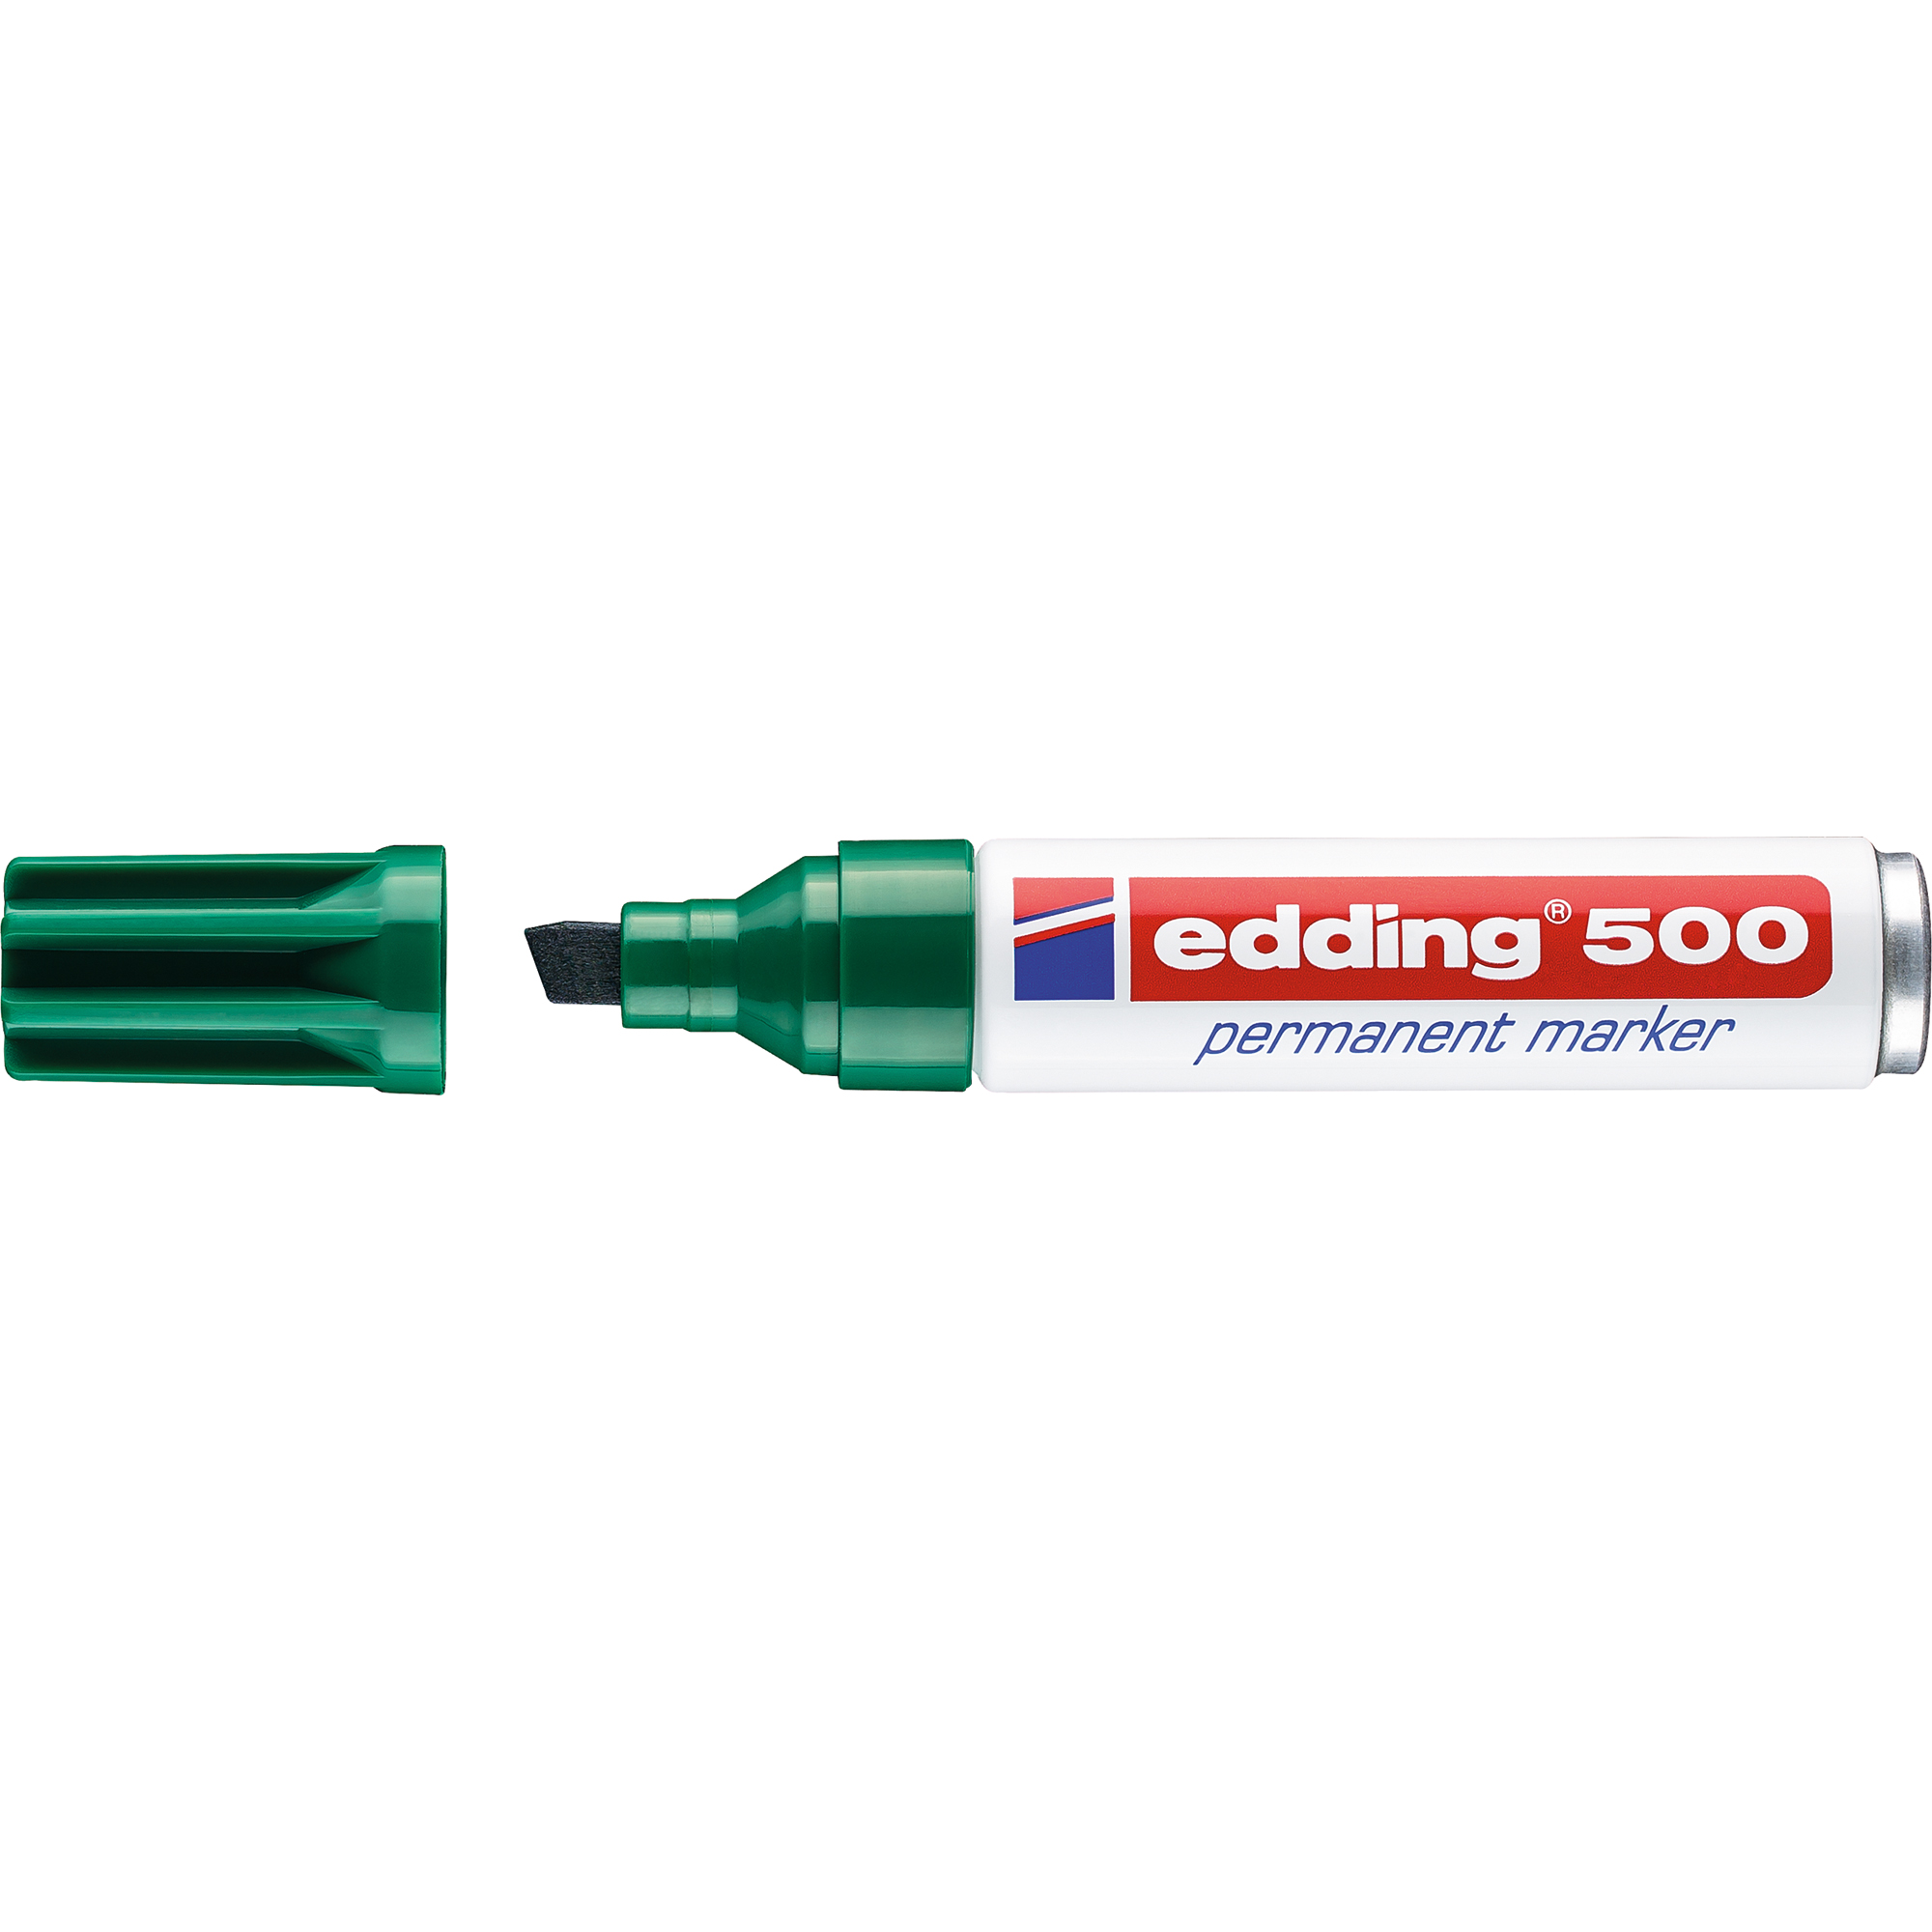 EDDING Permanentmarker 500 2-7mm nachfüllbar grün Permanentmarker, Keilspitze